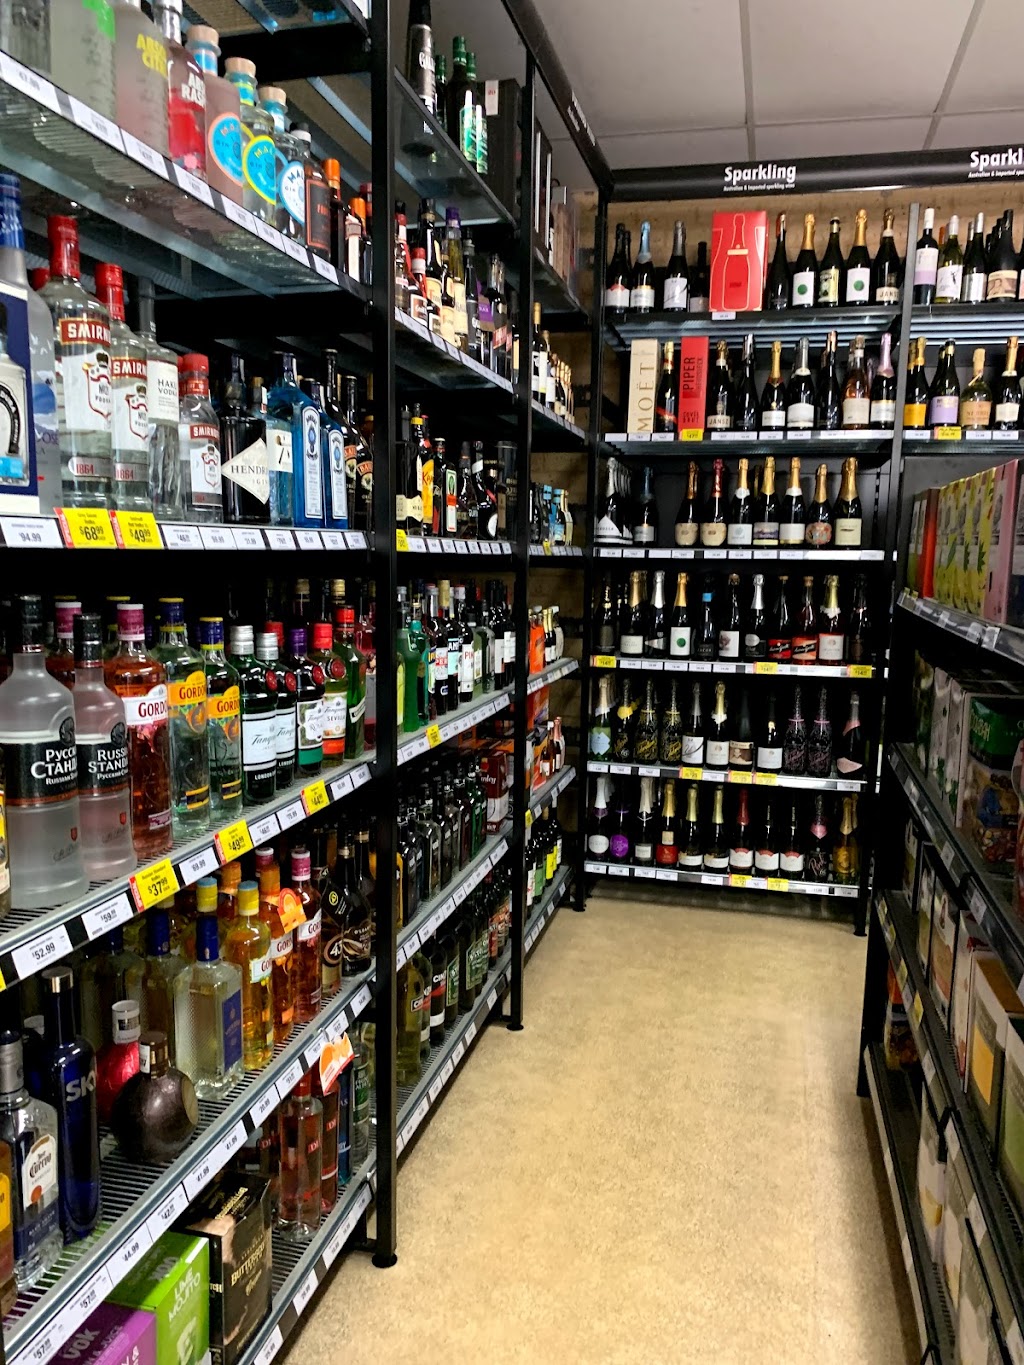 Bottlemart Kalbarri Cellars | liquor store | Grey St, Kalbarri WA 6536, Australia | 0899371361 OR +61 8 9937 1361